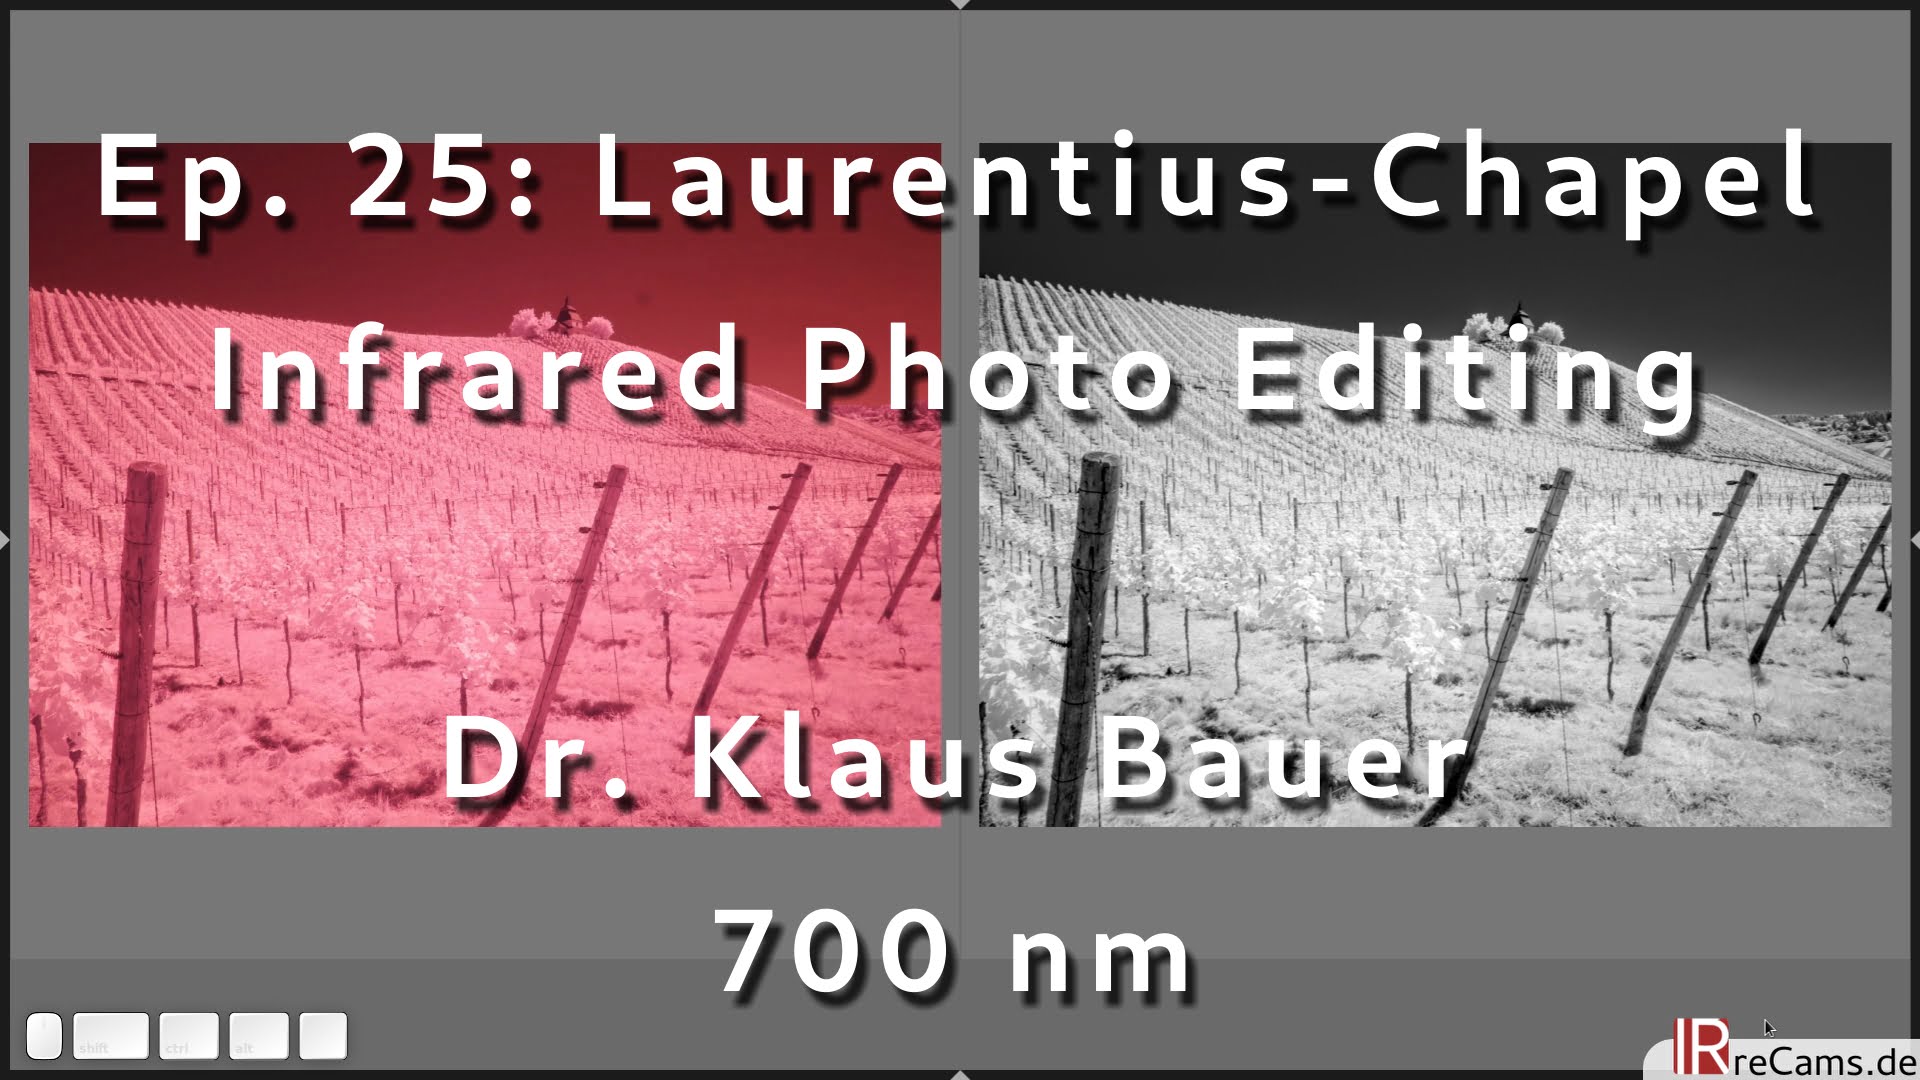 Ep. 25: Laurentius Chapel | Infrared Image Editing with darktable 3.4